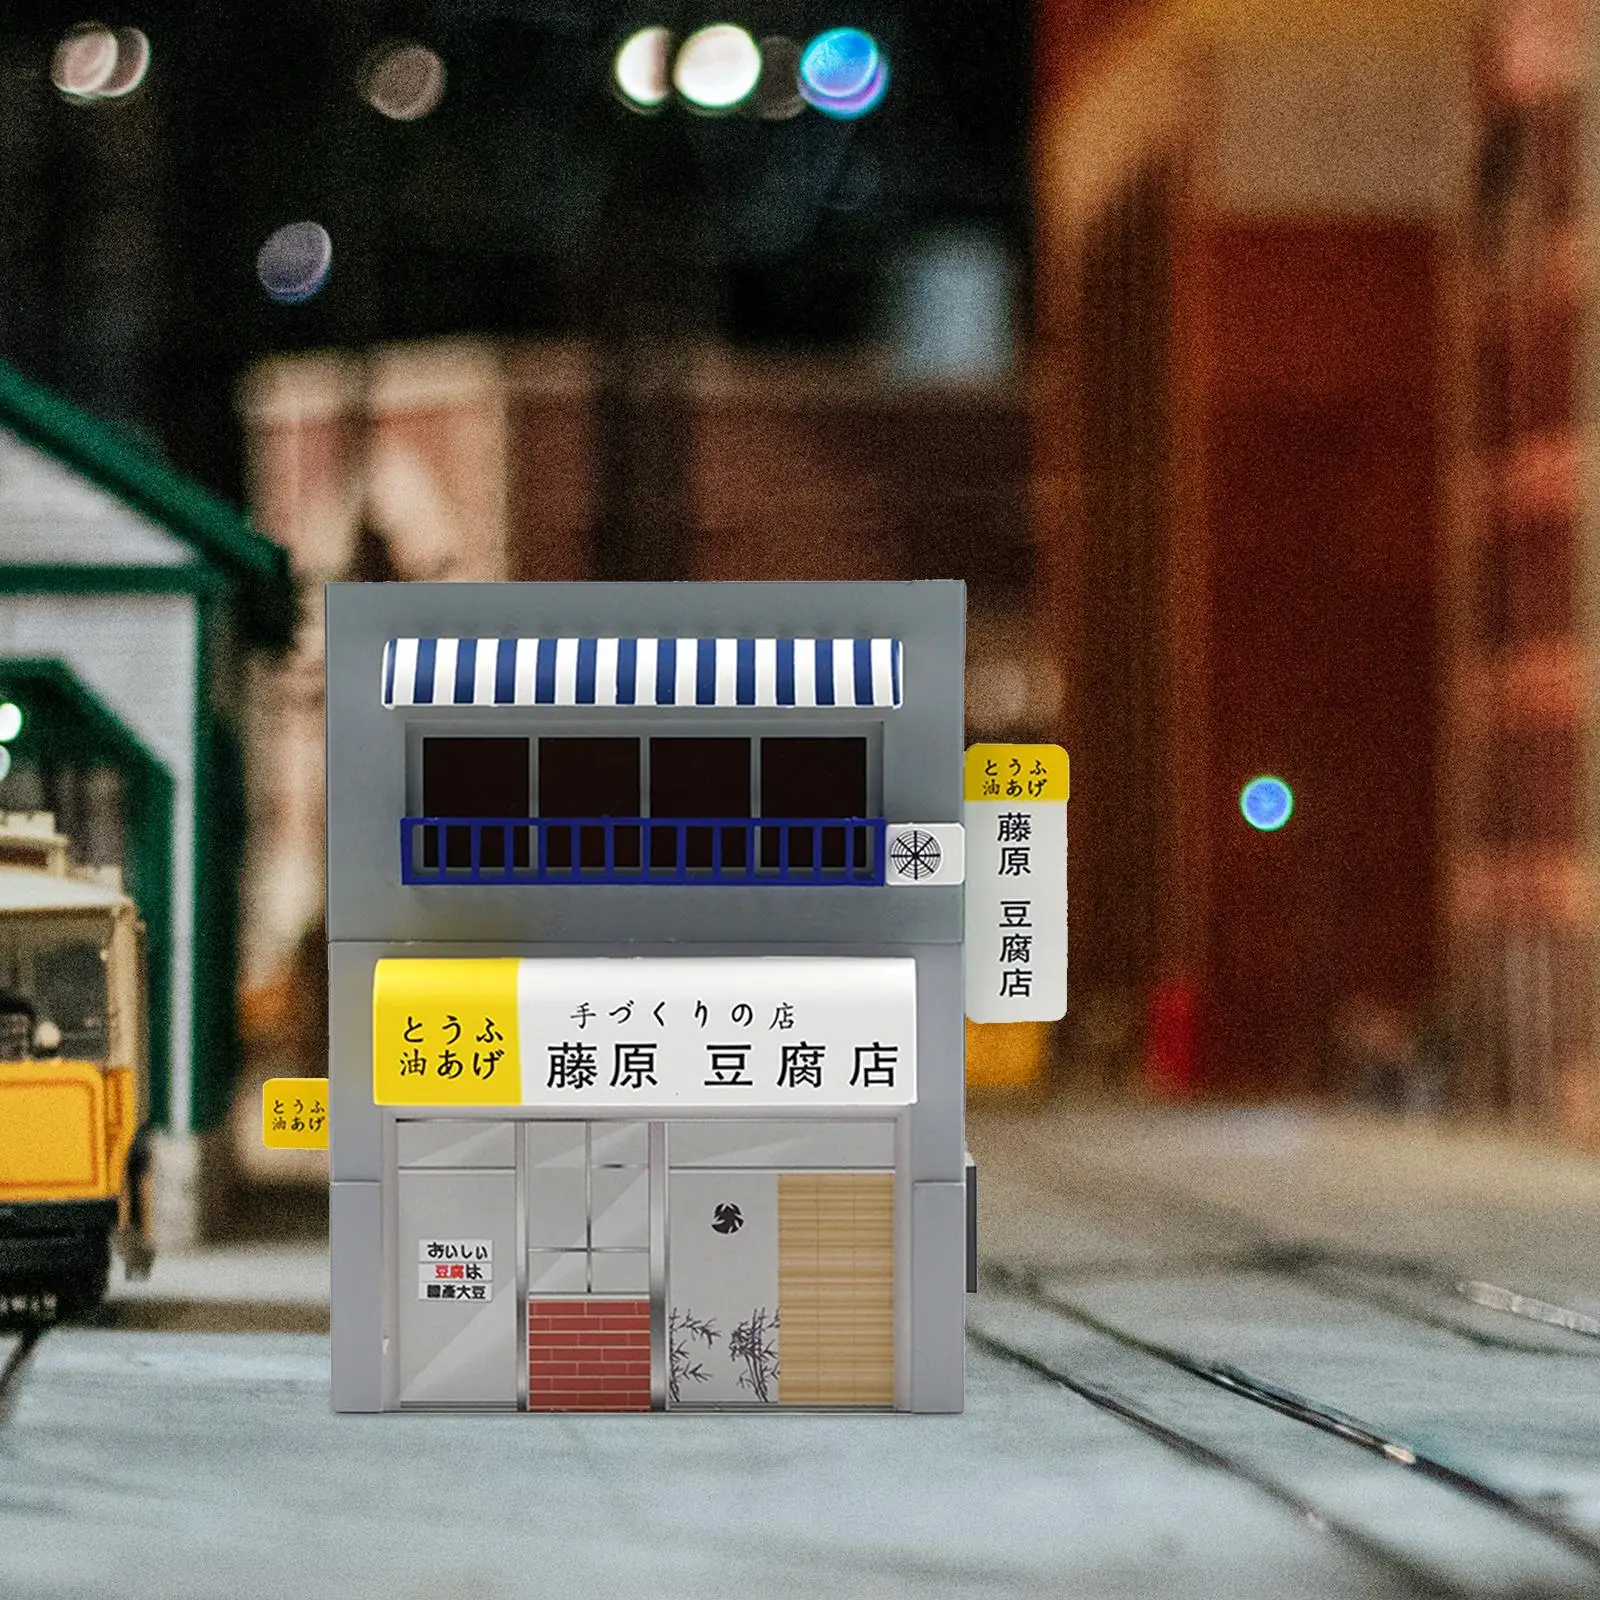 1:64 Scale Tofu Shop Diorama Model Collection Desktop S Scale Architectural Movie Props Scenery Store Townscape Scenery Ornament